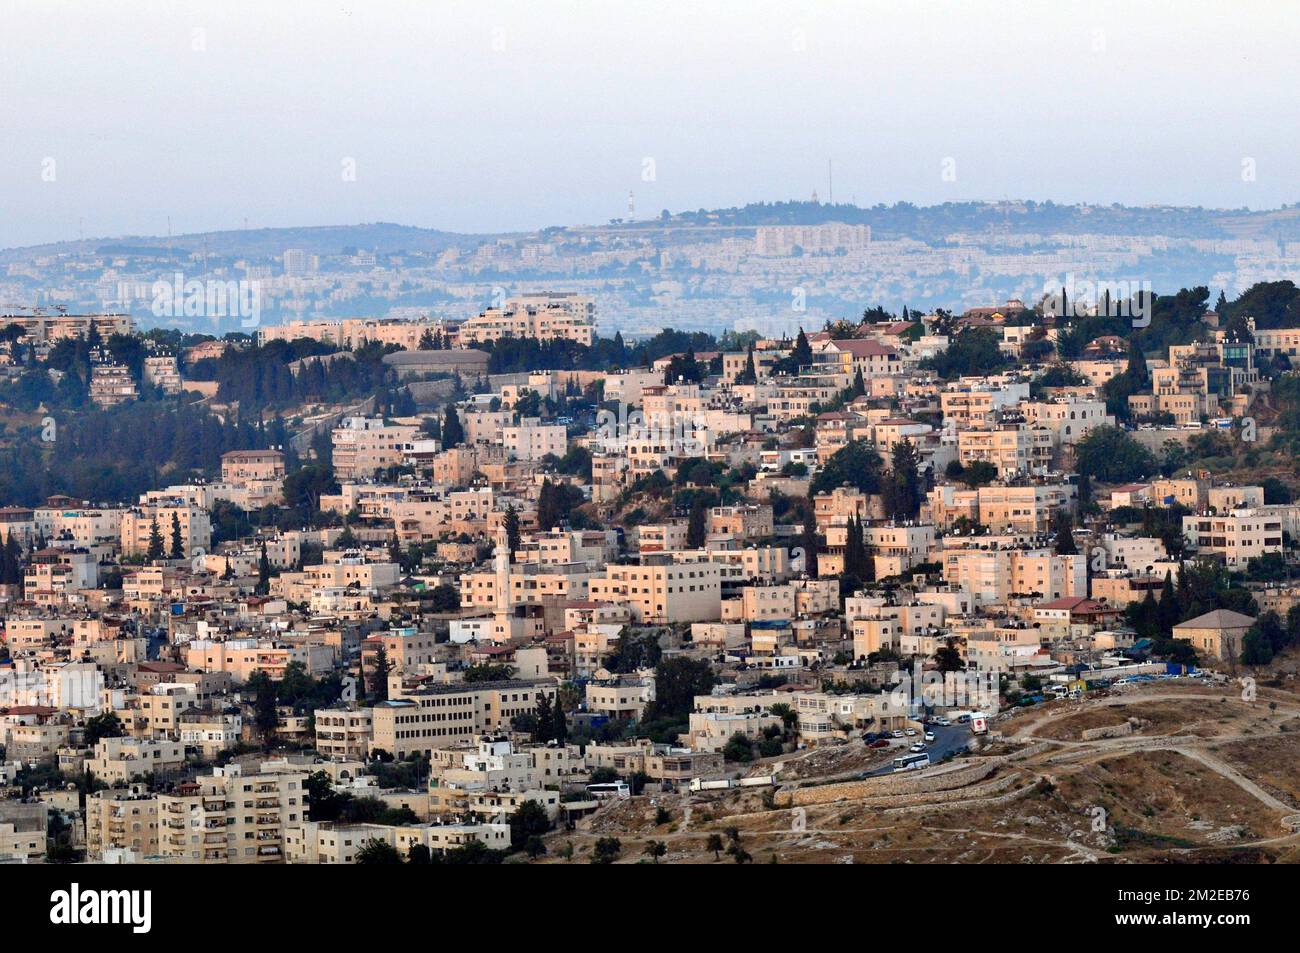 A view of Palestinian neighborhoods in East Jerusalem. Stock Photo